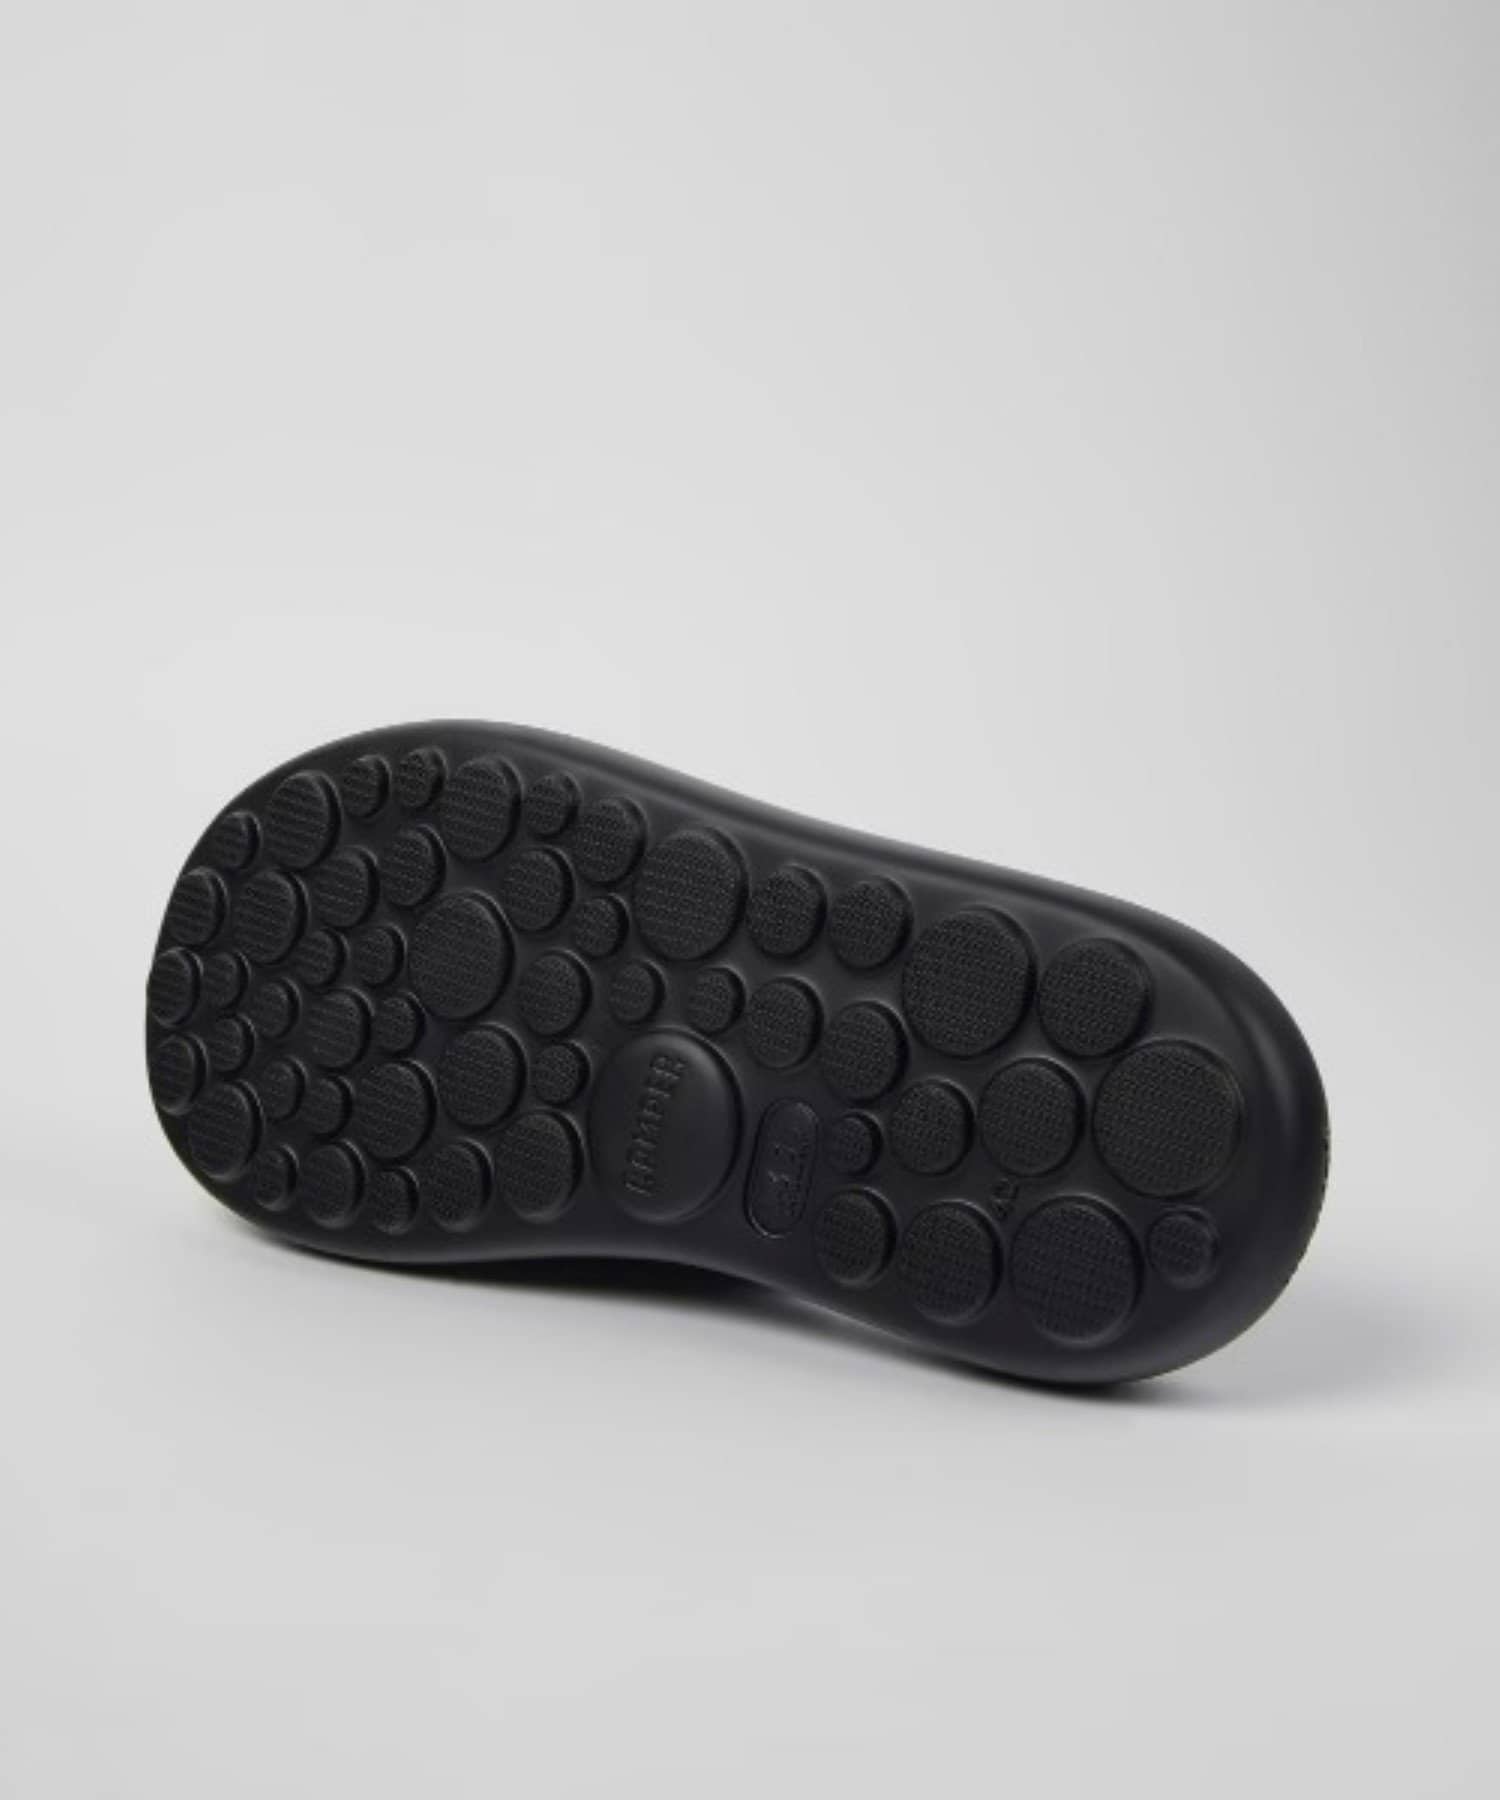 Pasterip(パセリ) TWS sandals